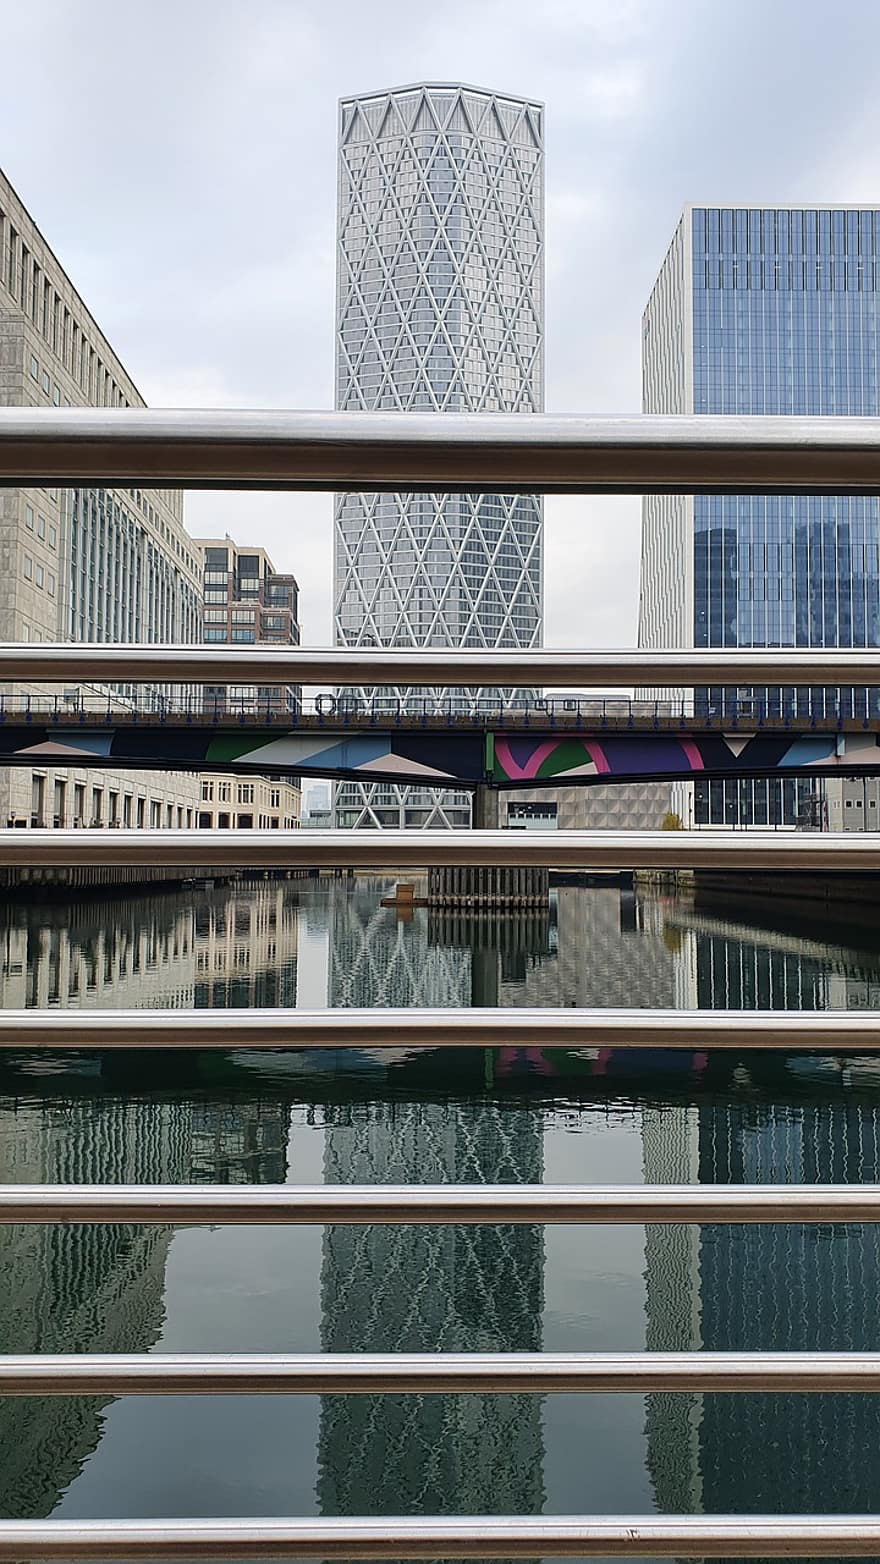 kanal, flod, bygninger, refleksioner, by-, Docklands, modernisme, kanariske kaj, arkitektur